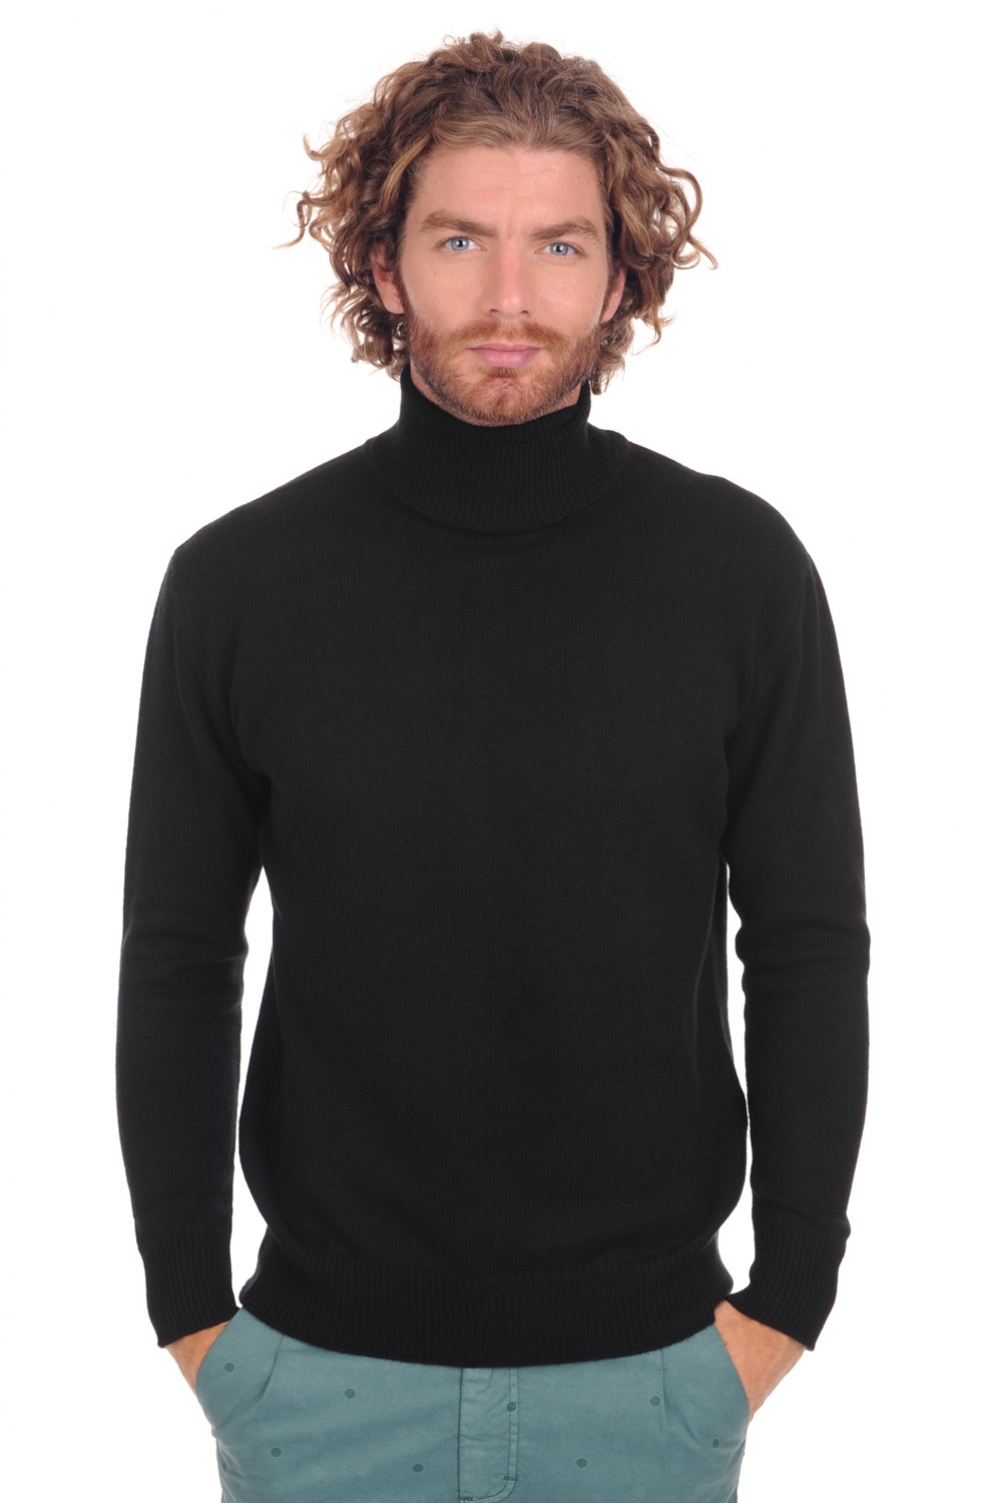 Cashmere men chunky sweater edgar 4f premium black xl